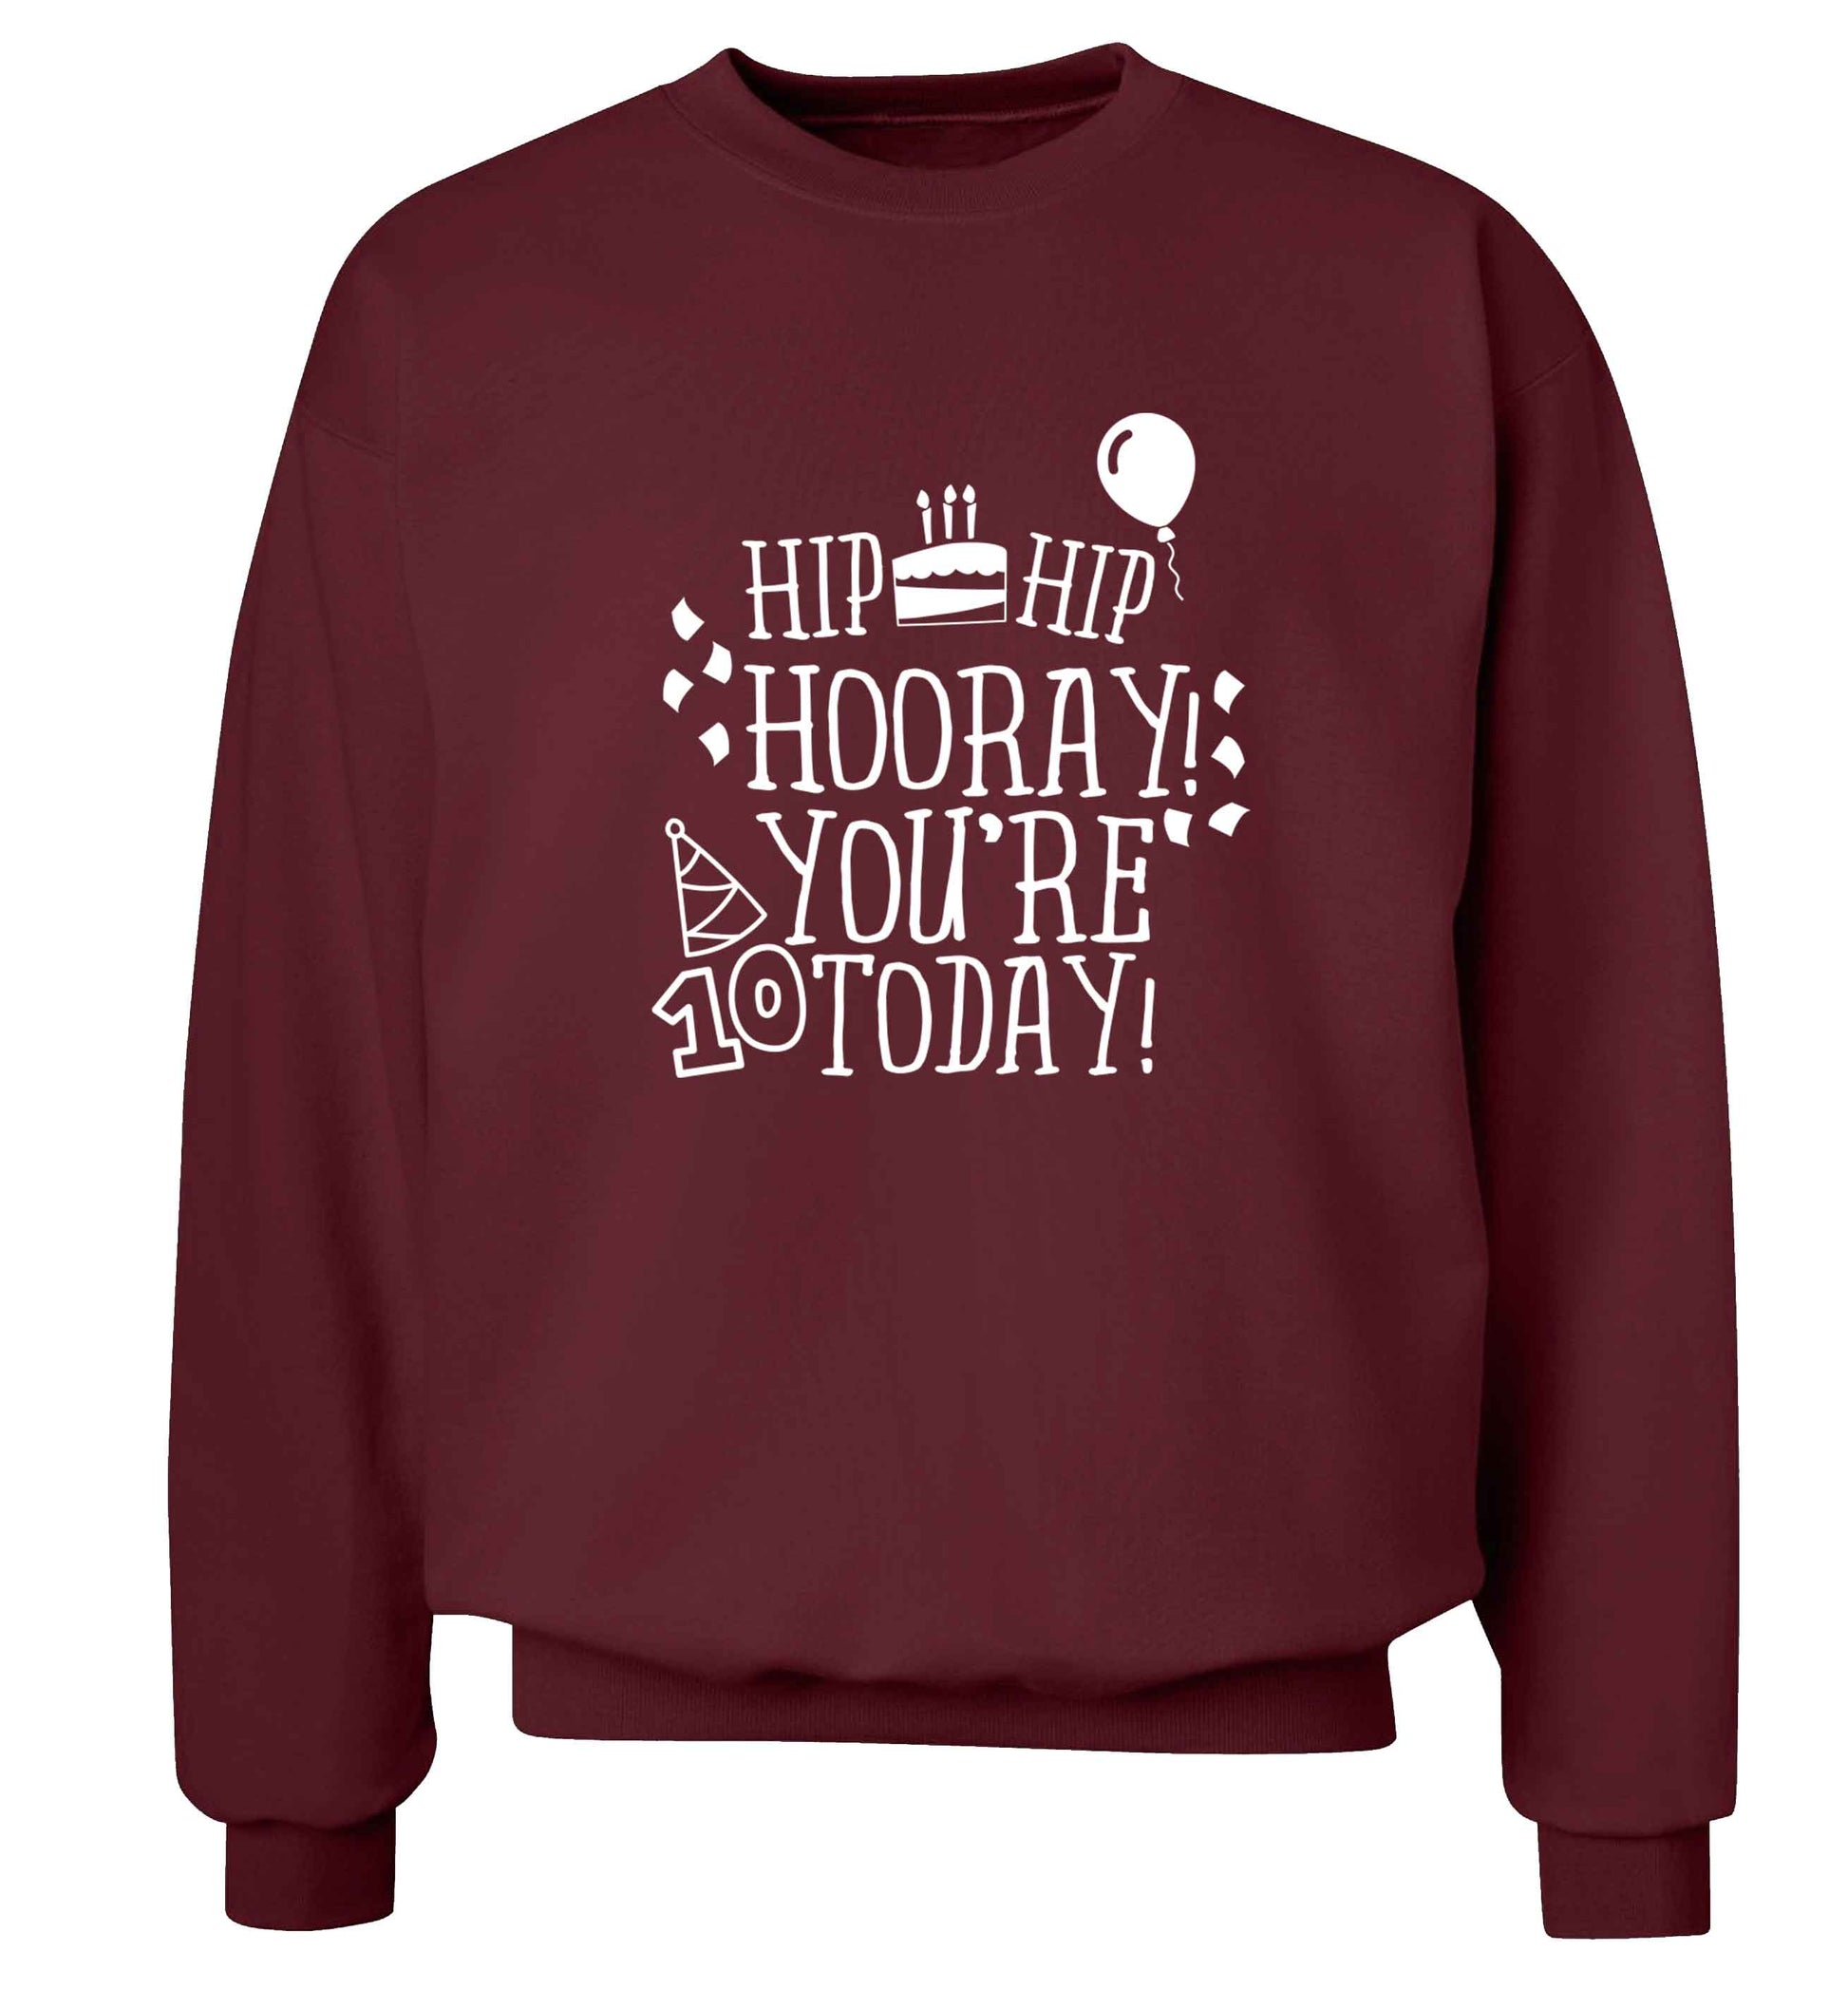 Hip hip hooray you're ten today! adult's unisex maroon sweater 2XL